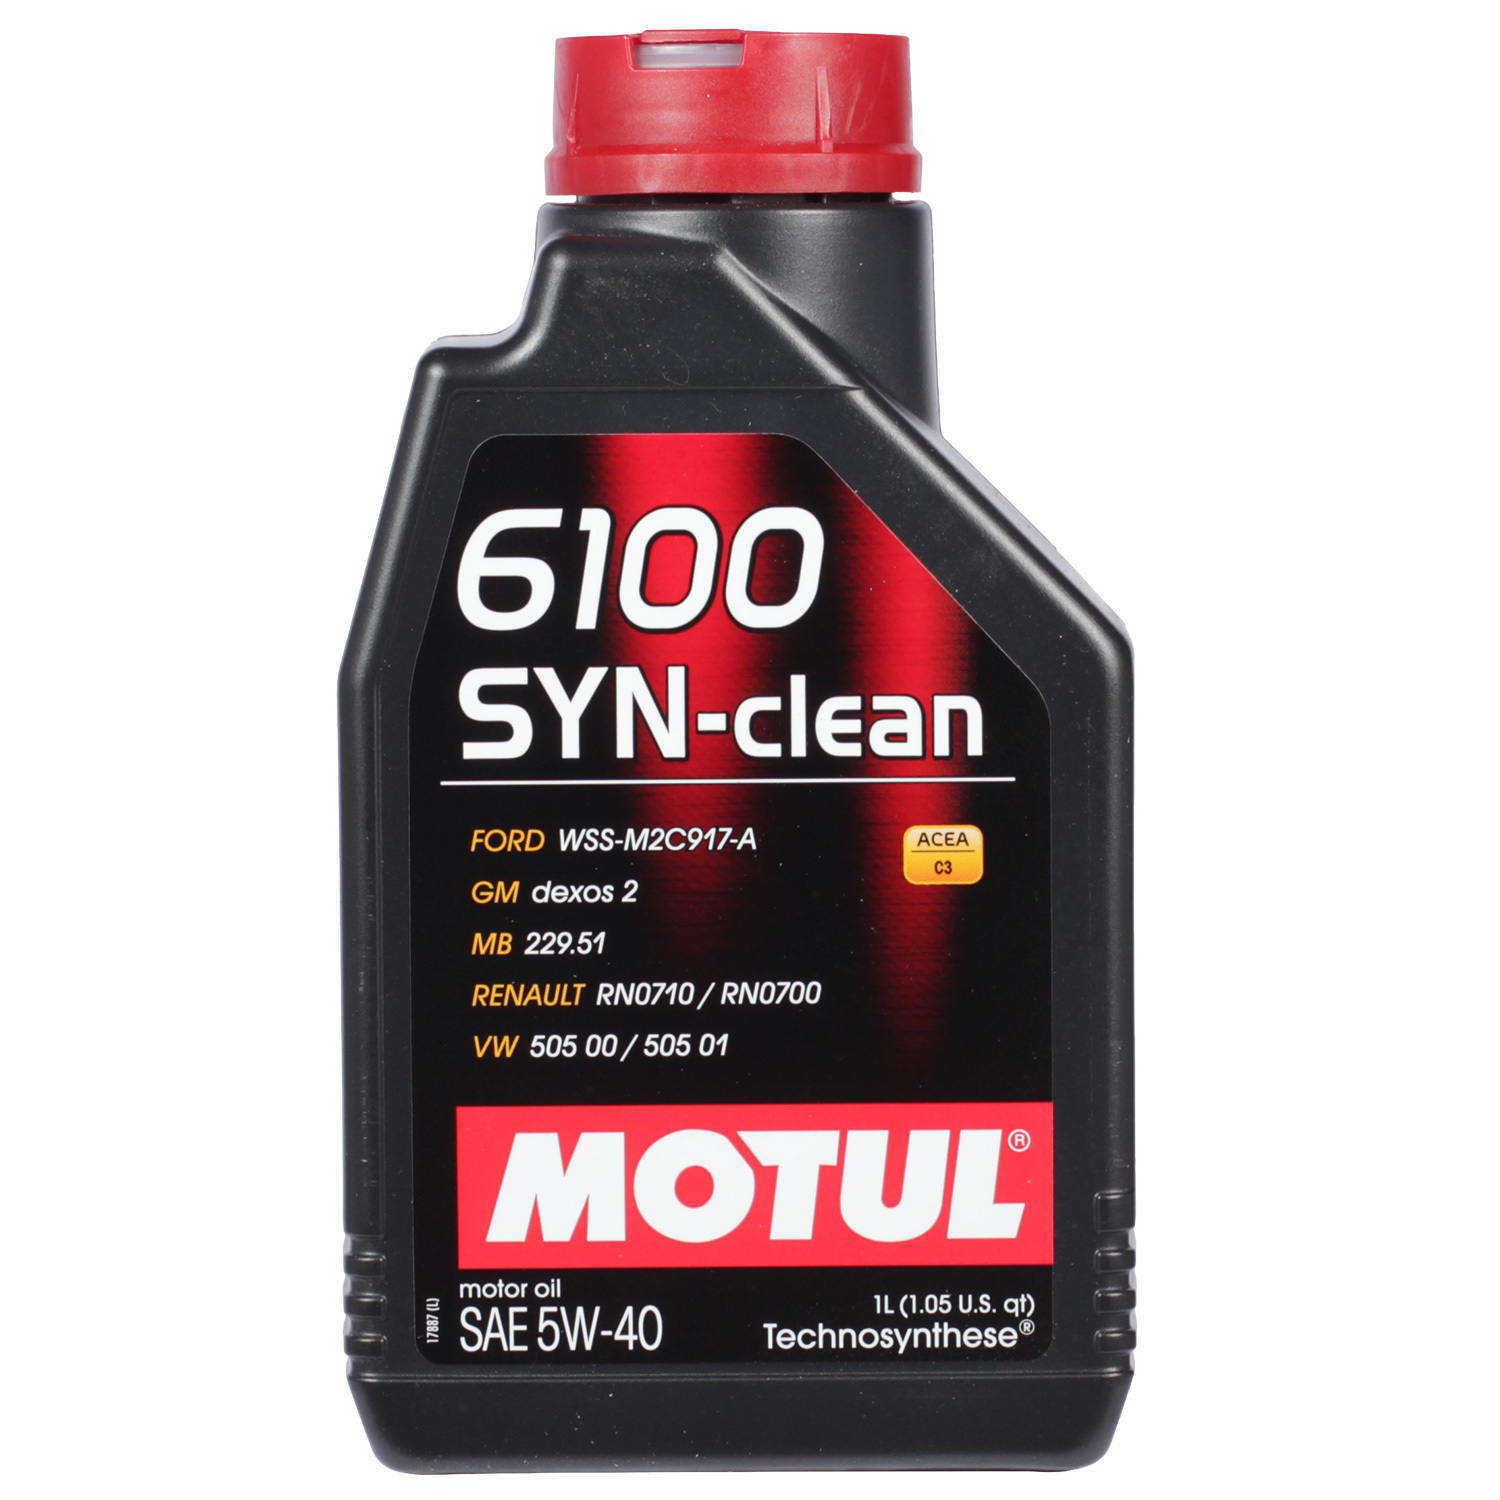 Motul Моторное масло Motul 6100 SYN-CLEAN 5W-40, 1 л motul моторное масло motul 6100 synclean 5w 40 5 л